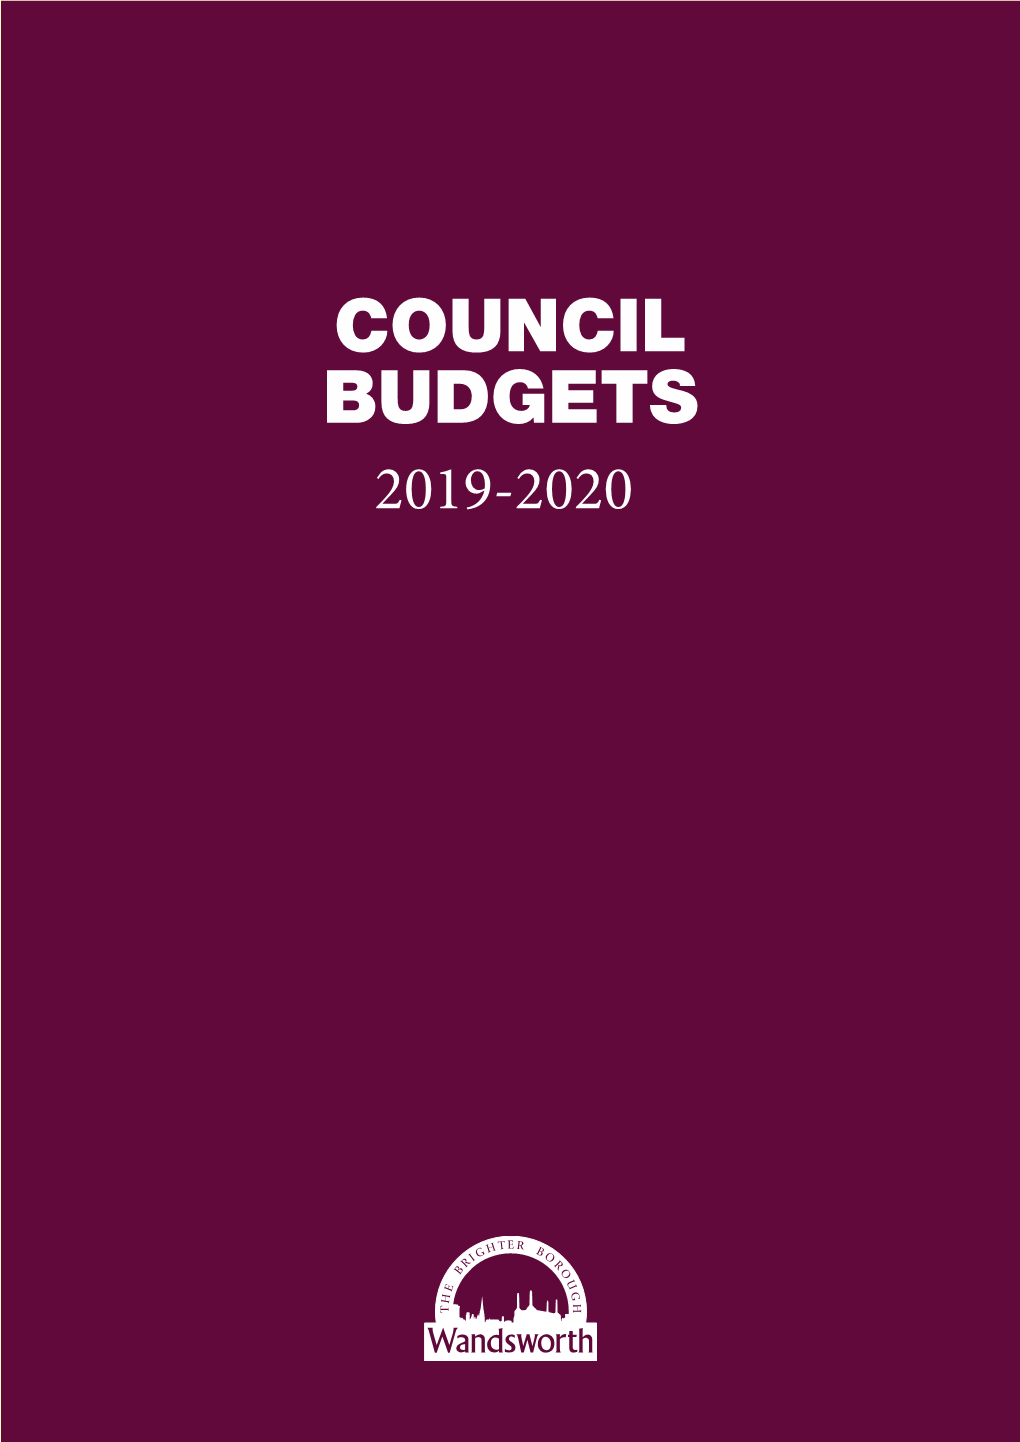 Council Budget 2019/20